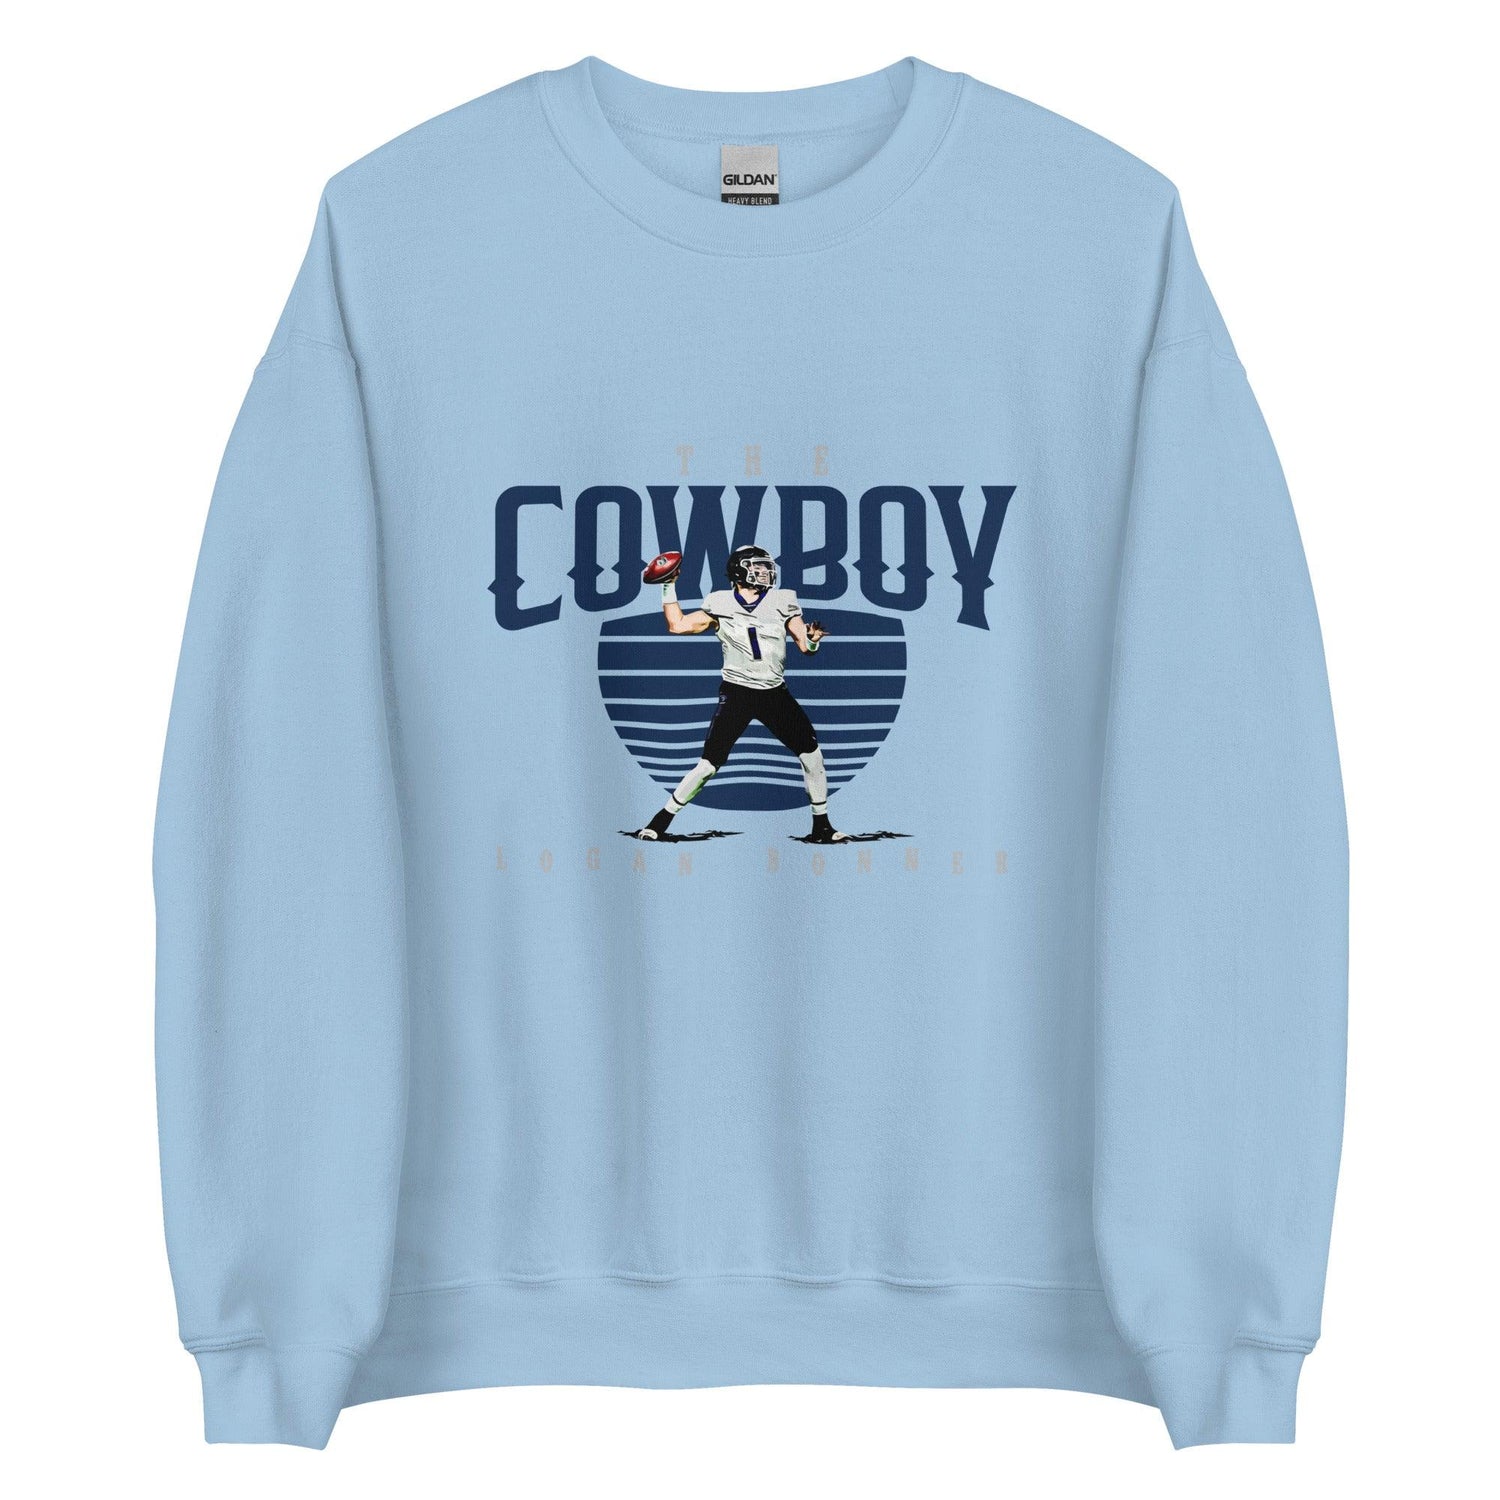 Logan Bonner "The Cowboy" Sweatshirt - Fan Arch